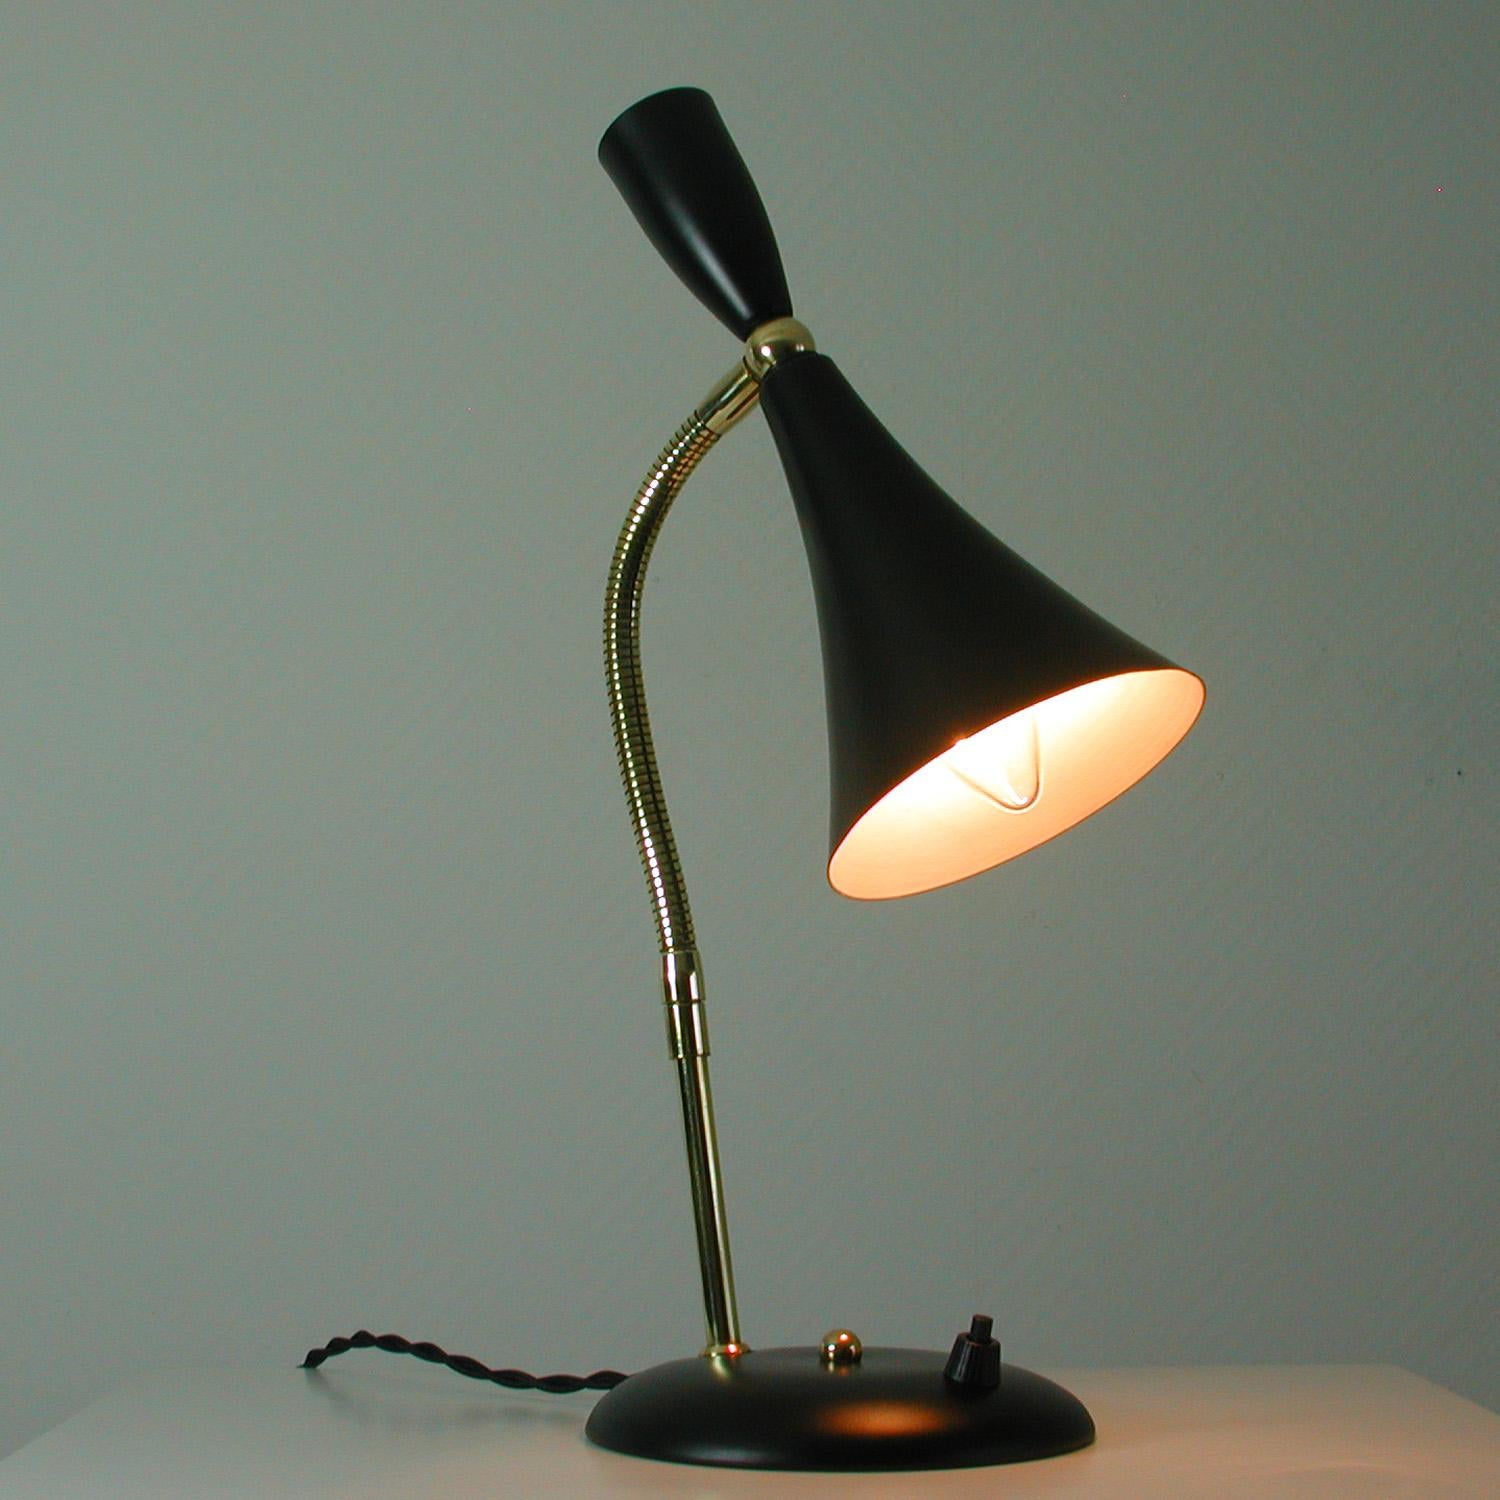 Italian Midcentury Black and Brass Sputnik Table Lamp, 1950s For Sale 4